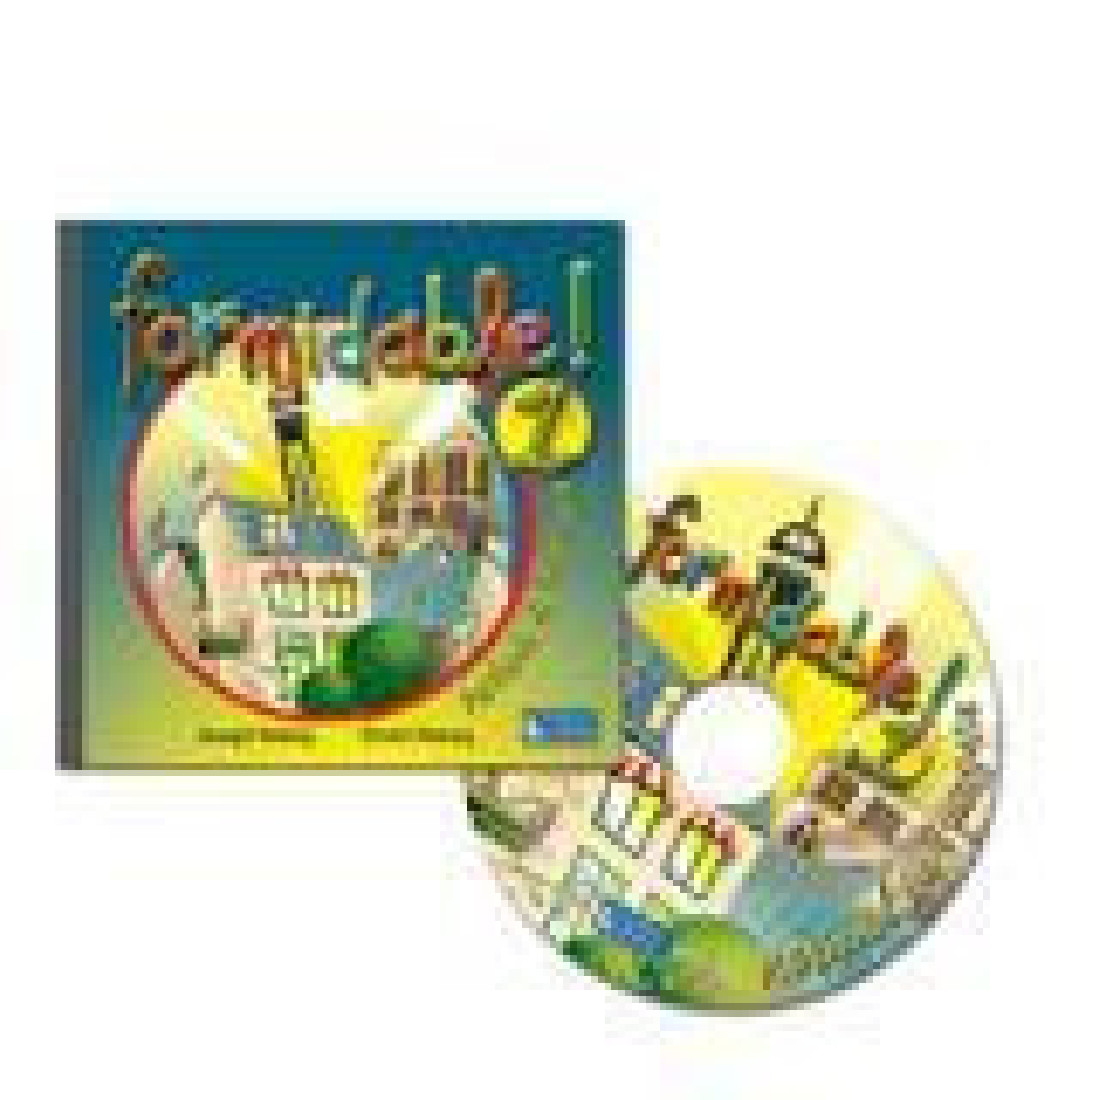 FORMIDABLE 1 CD